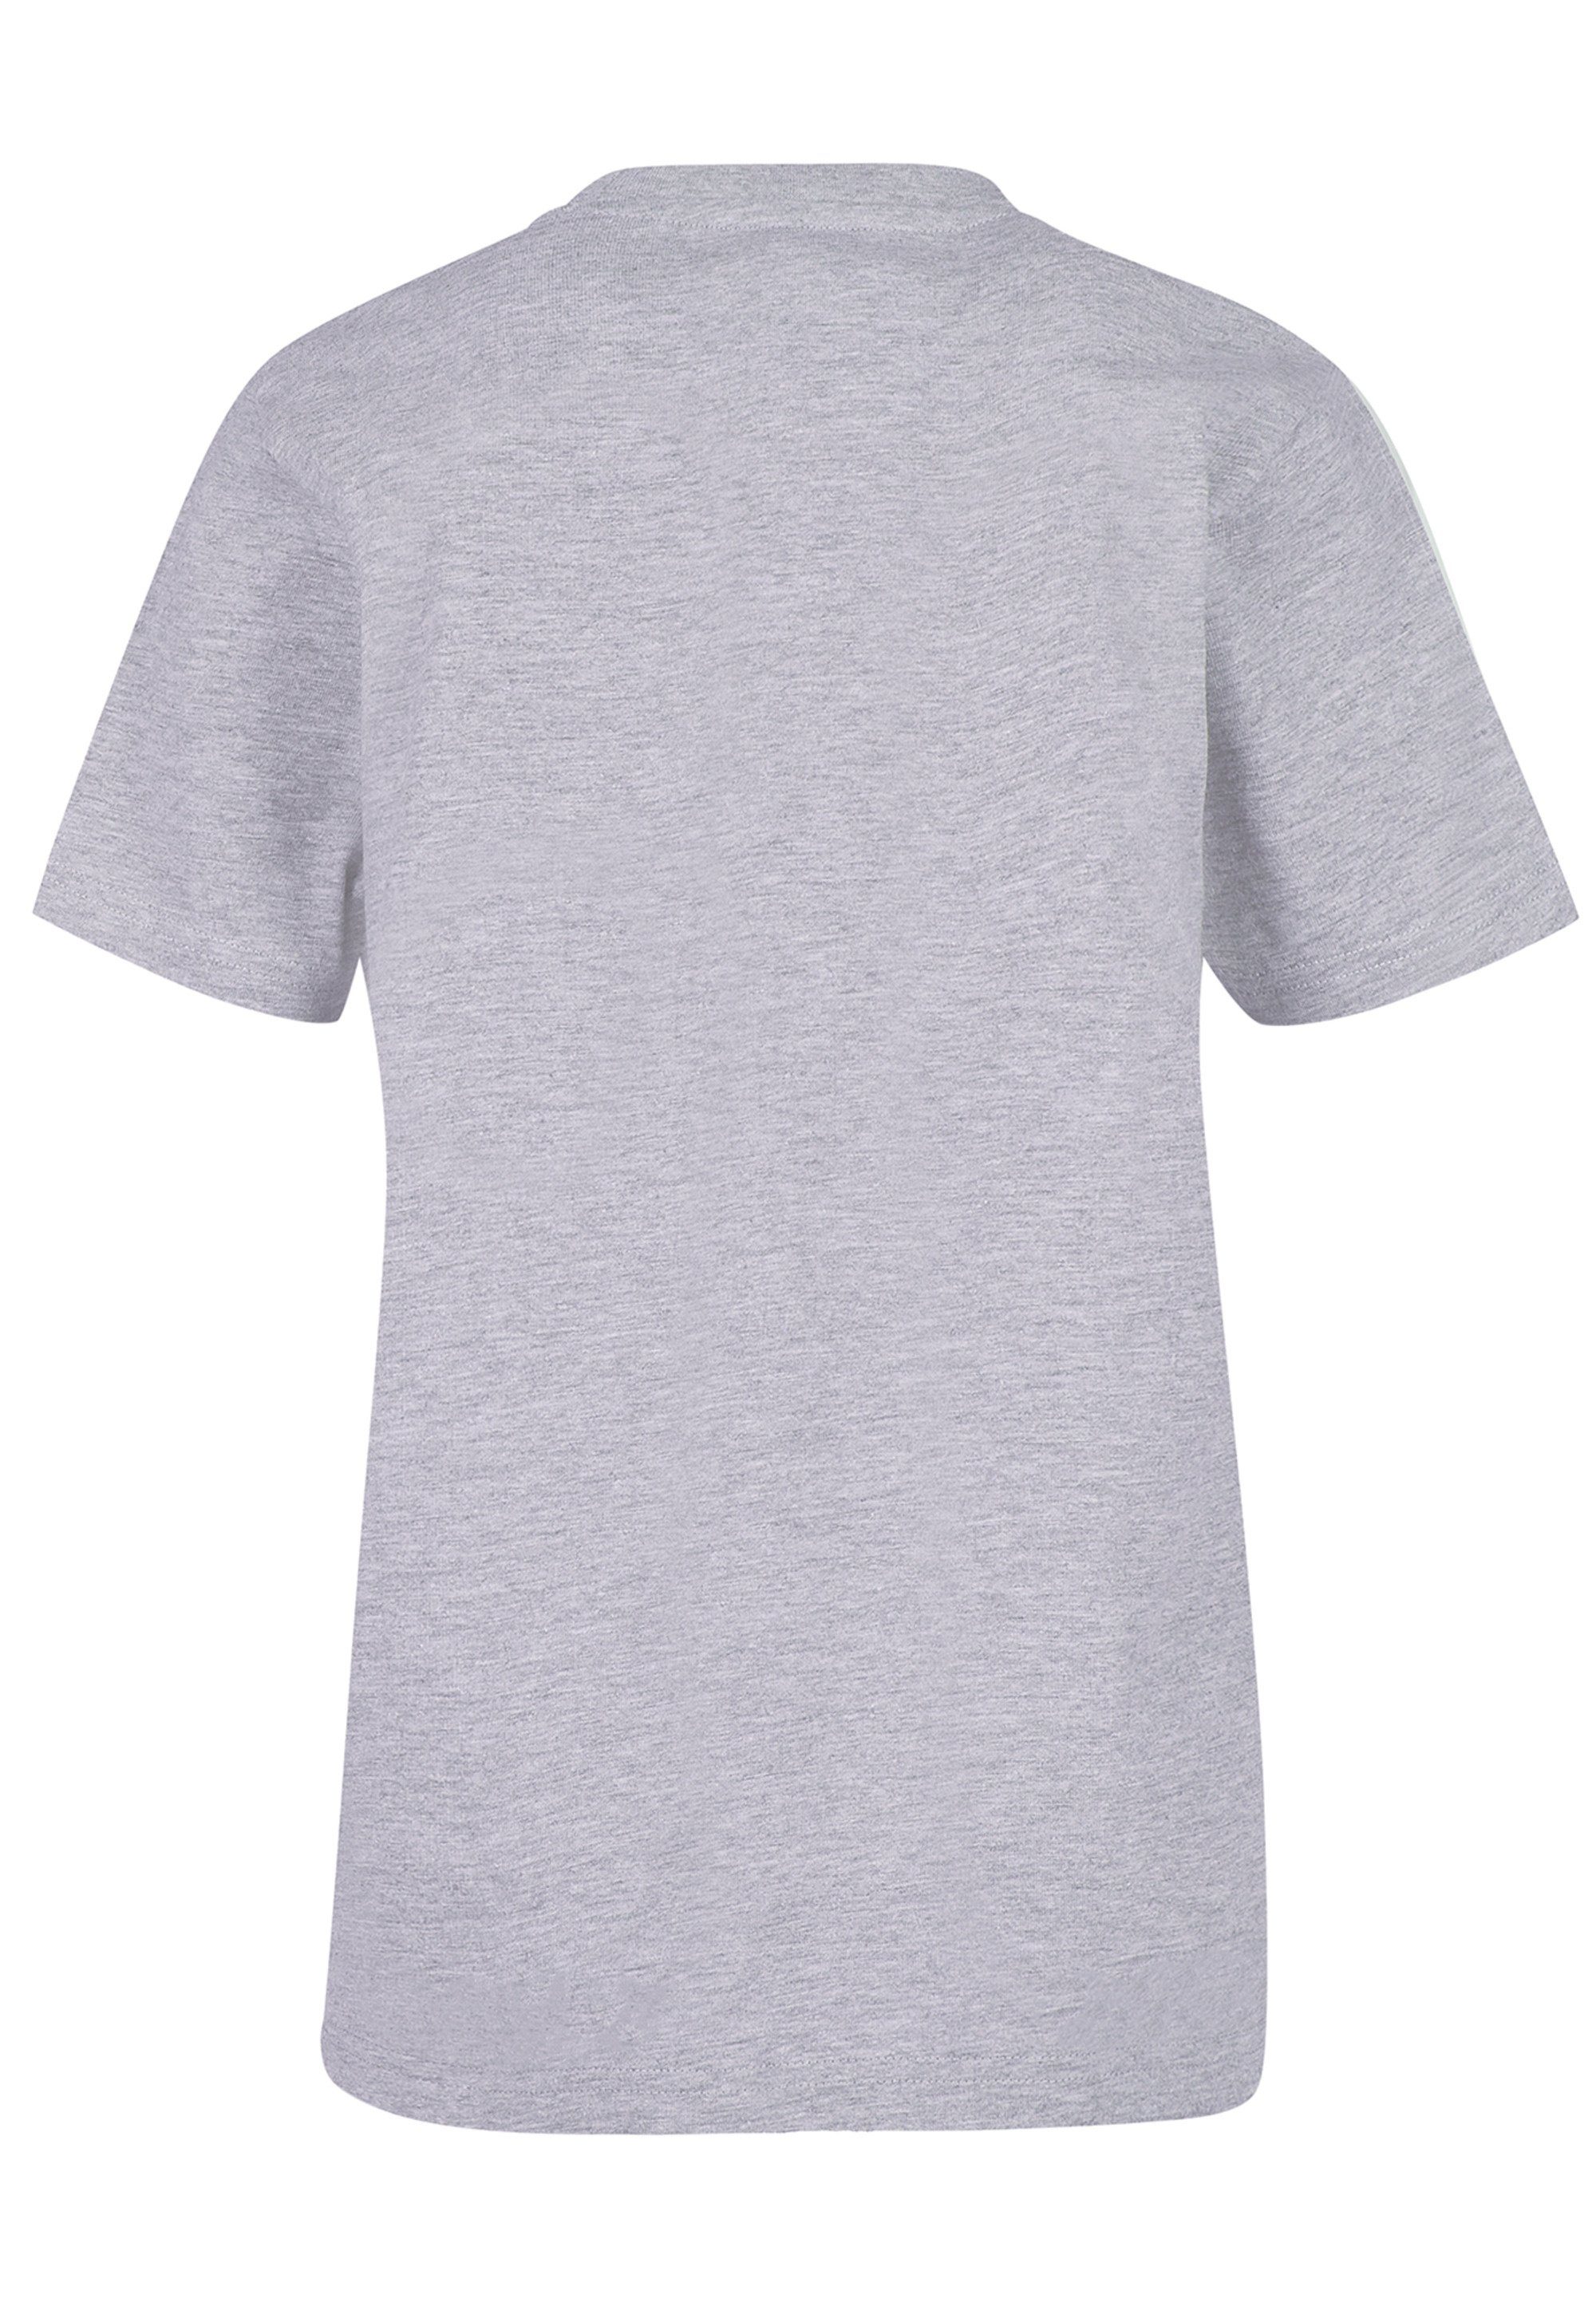 F4NT4STIC T-Shirt Snowboarder Print heather grey